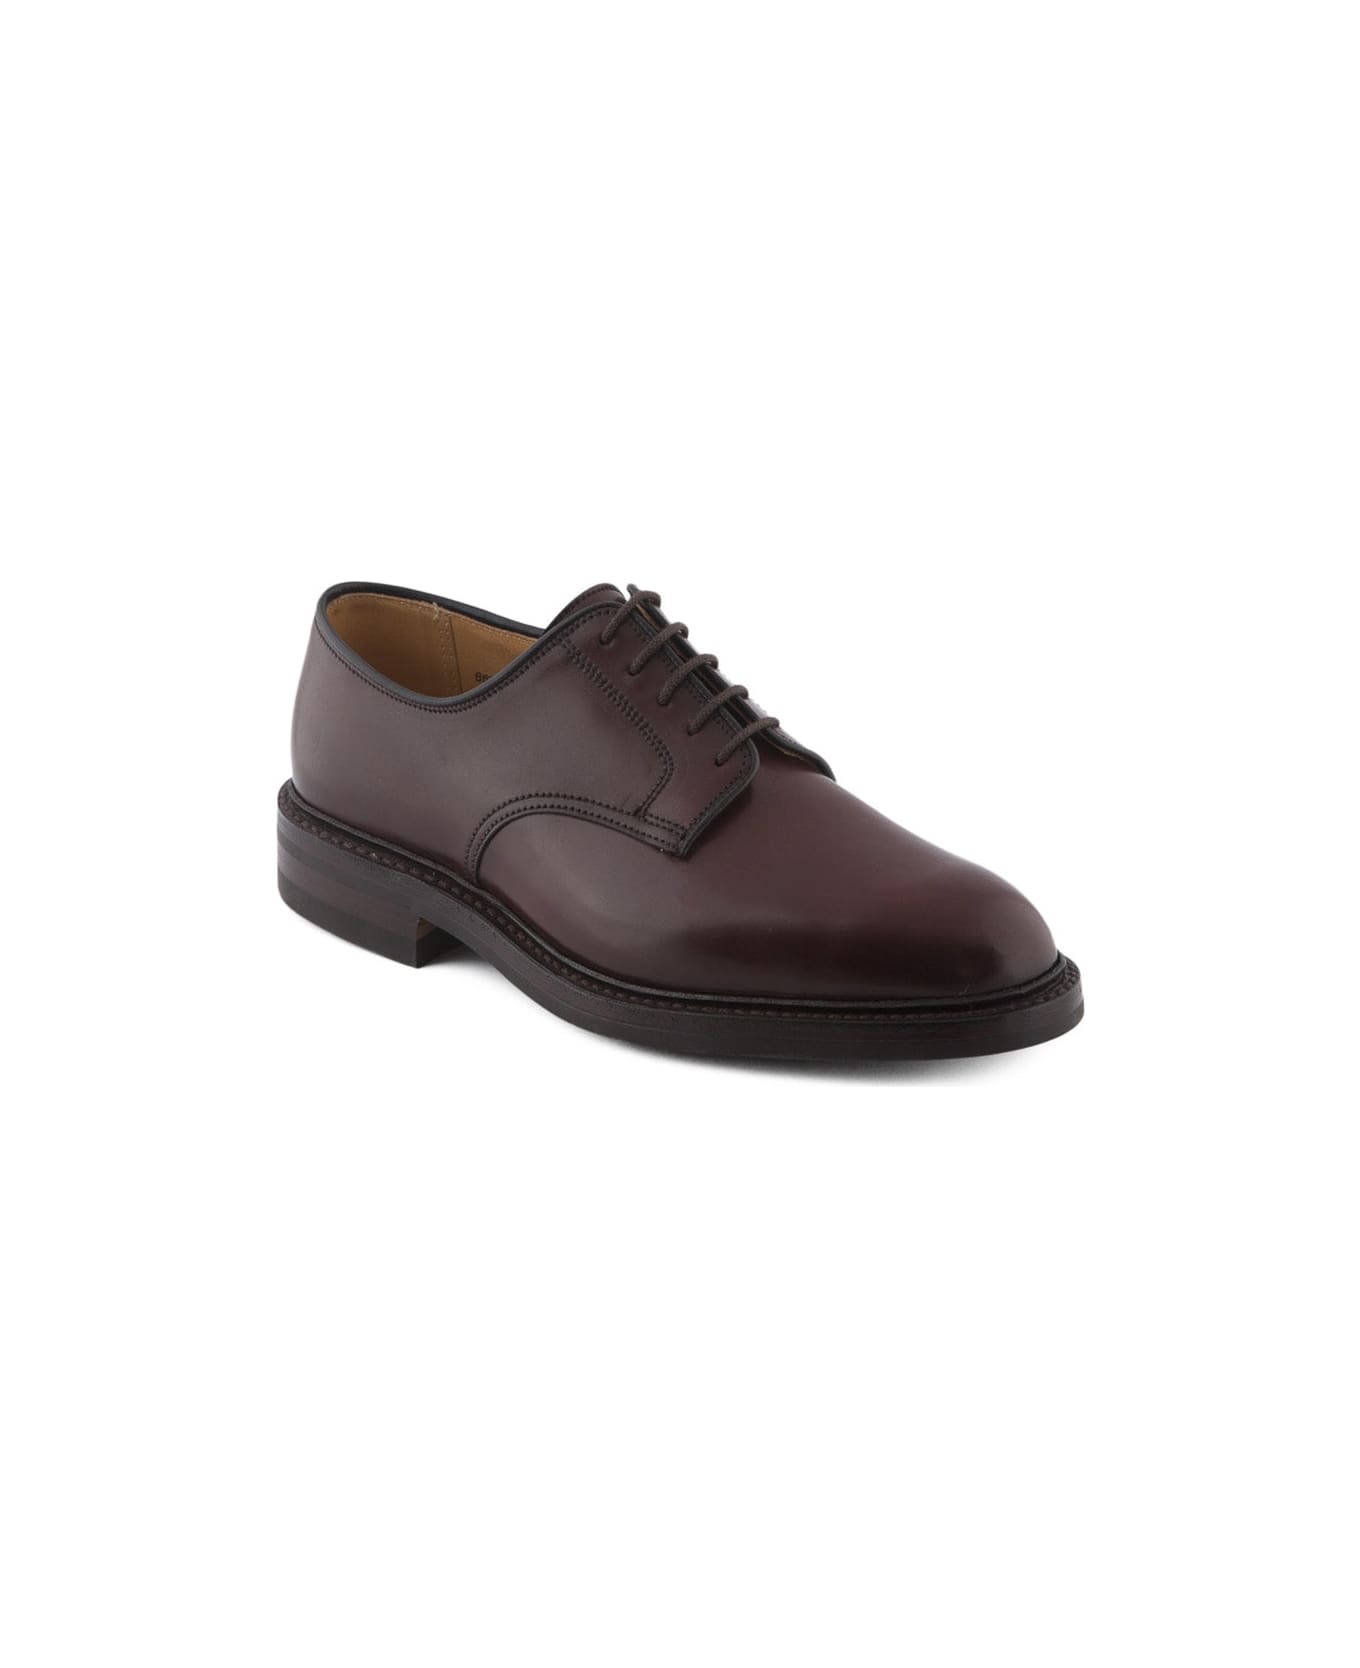 Crockett & Jones Lace-up Shoe Grasmere In Cordovan Burgundy Leather - burgundy